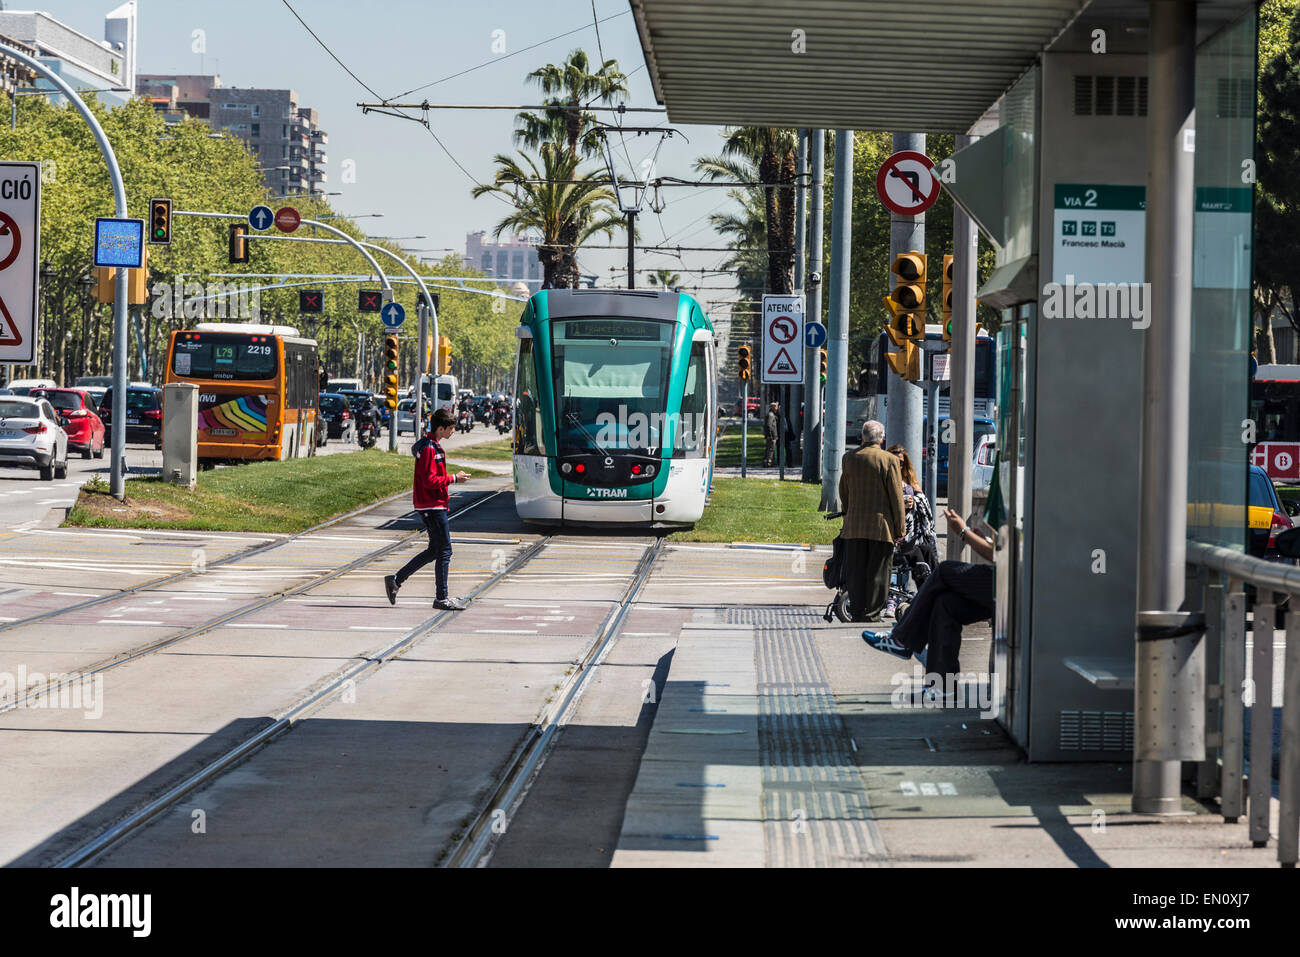 Barcelona tram known as Trambaix in Barcelona, Catalonia, Spain Stock Photo